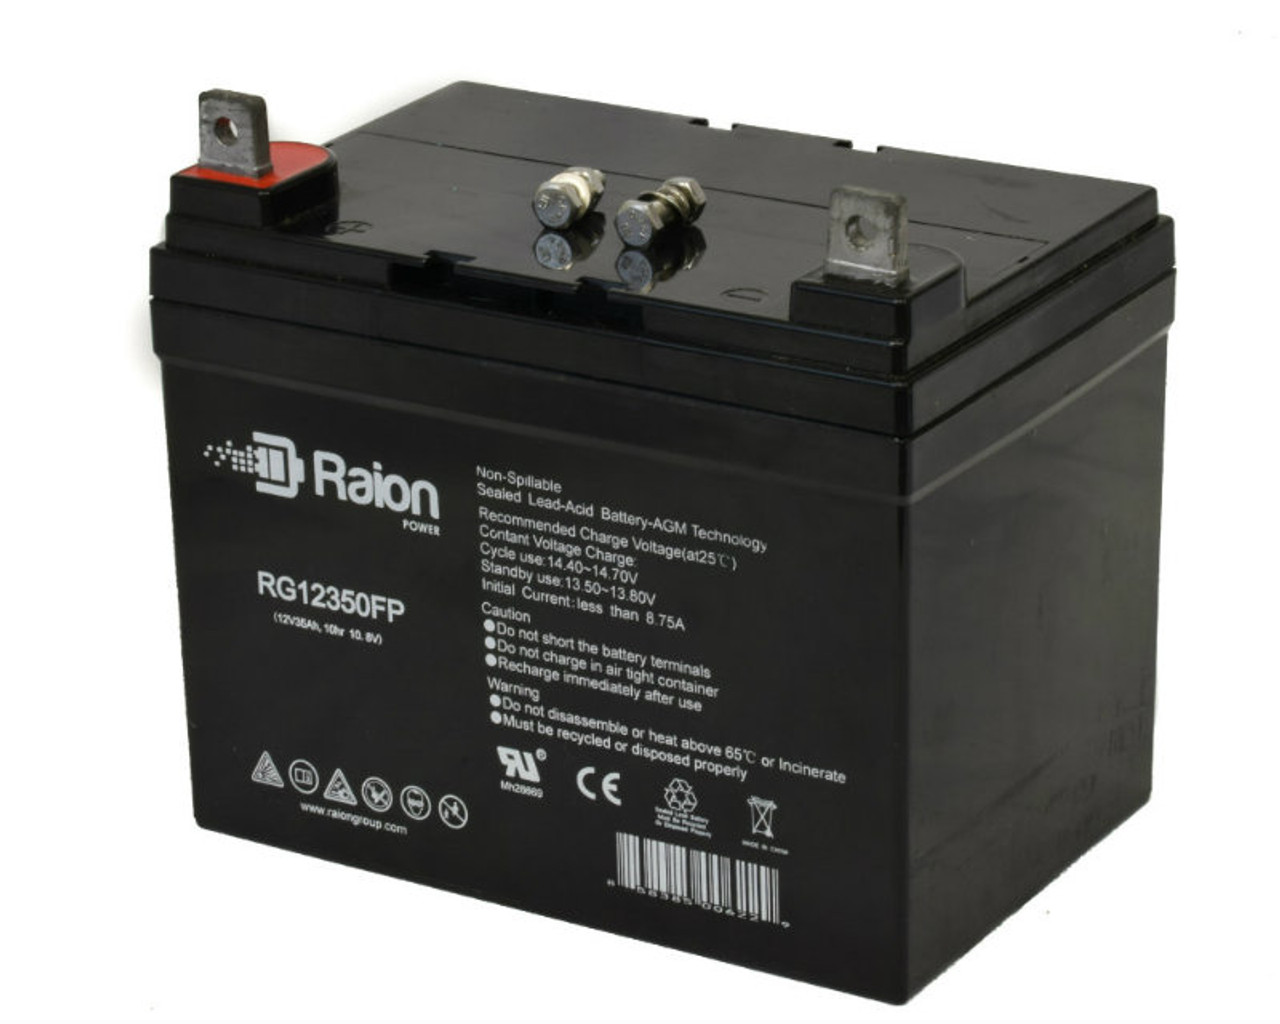 Raion Power Replacement 12V 35Ah RG12350FP Battery for Kubota B4200